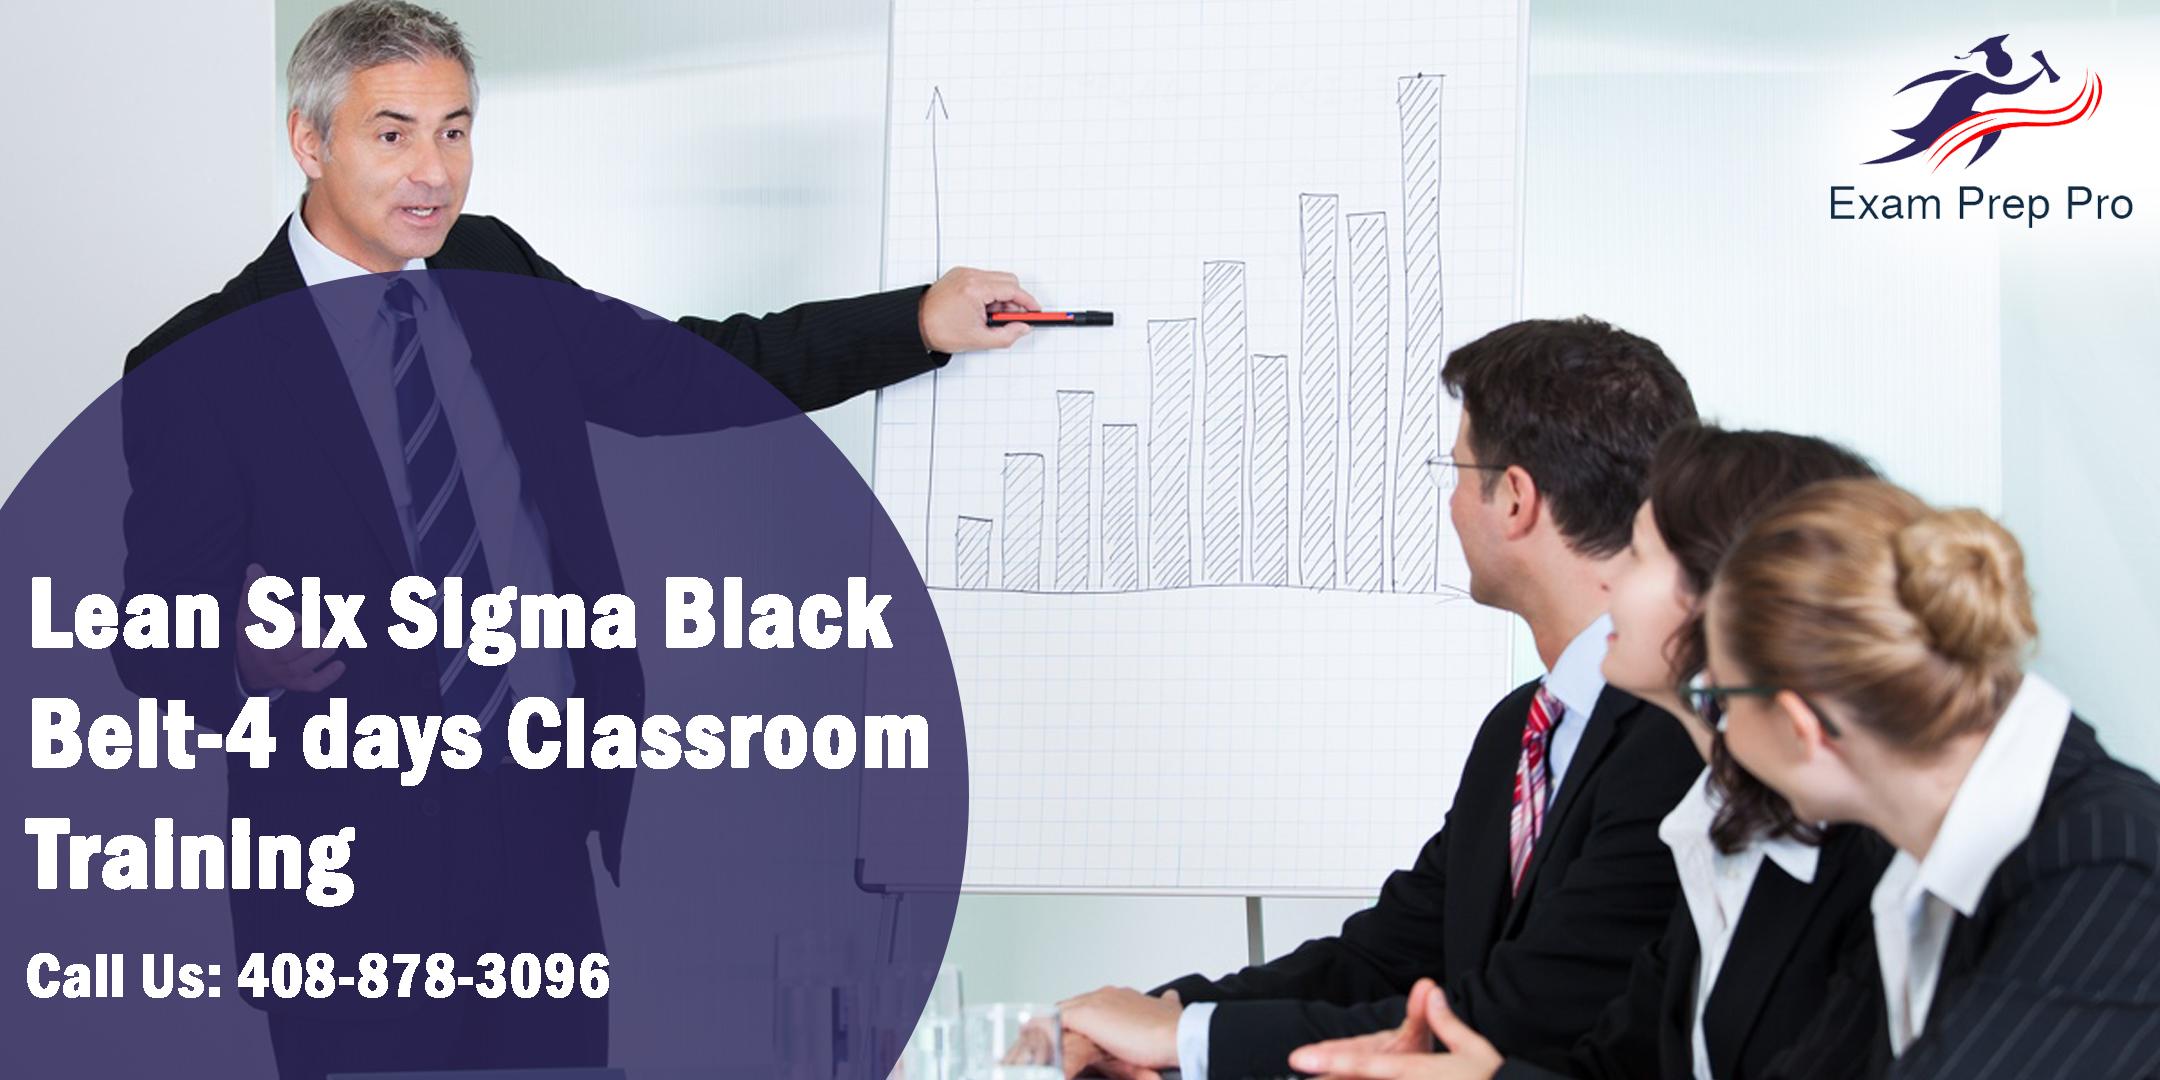 Lean Six Sigma Black Belt-4 days Classroom Training in Phoenix, AZ